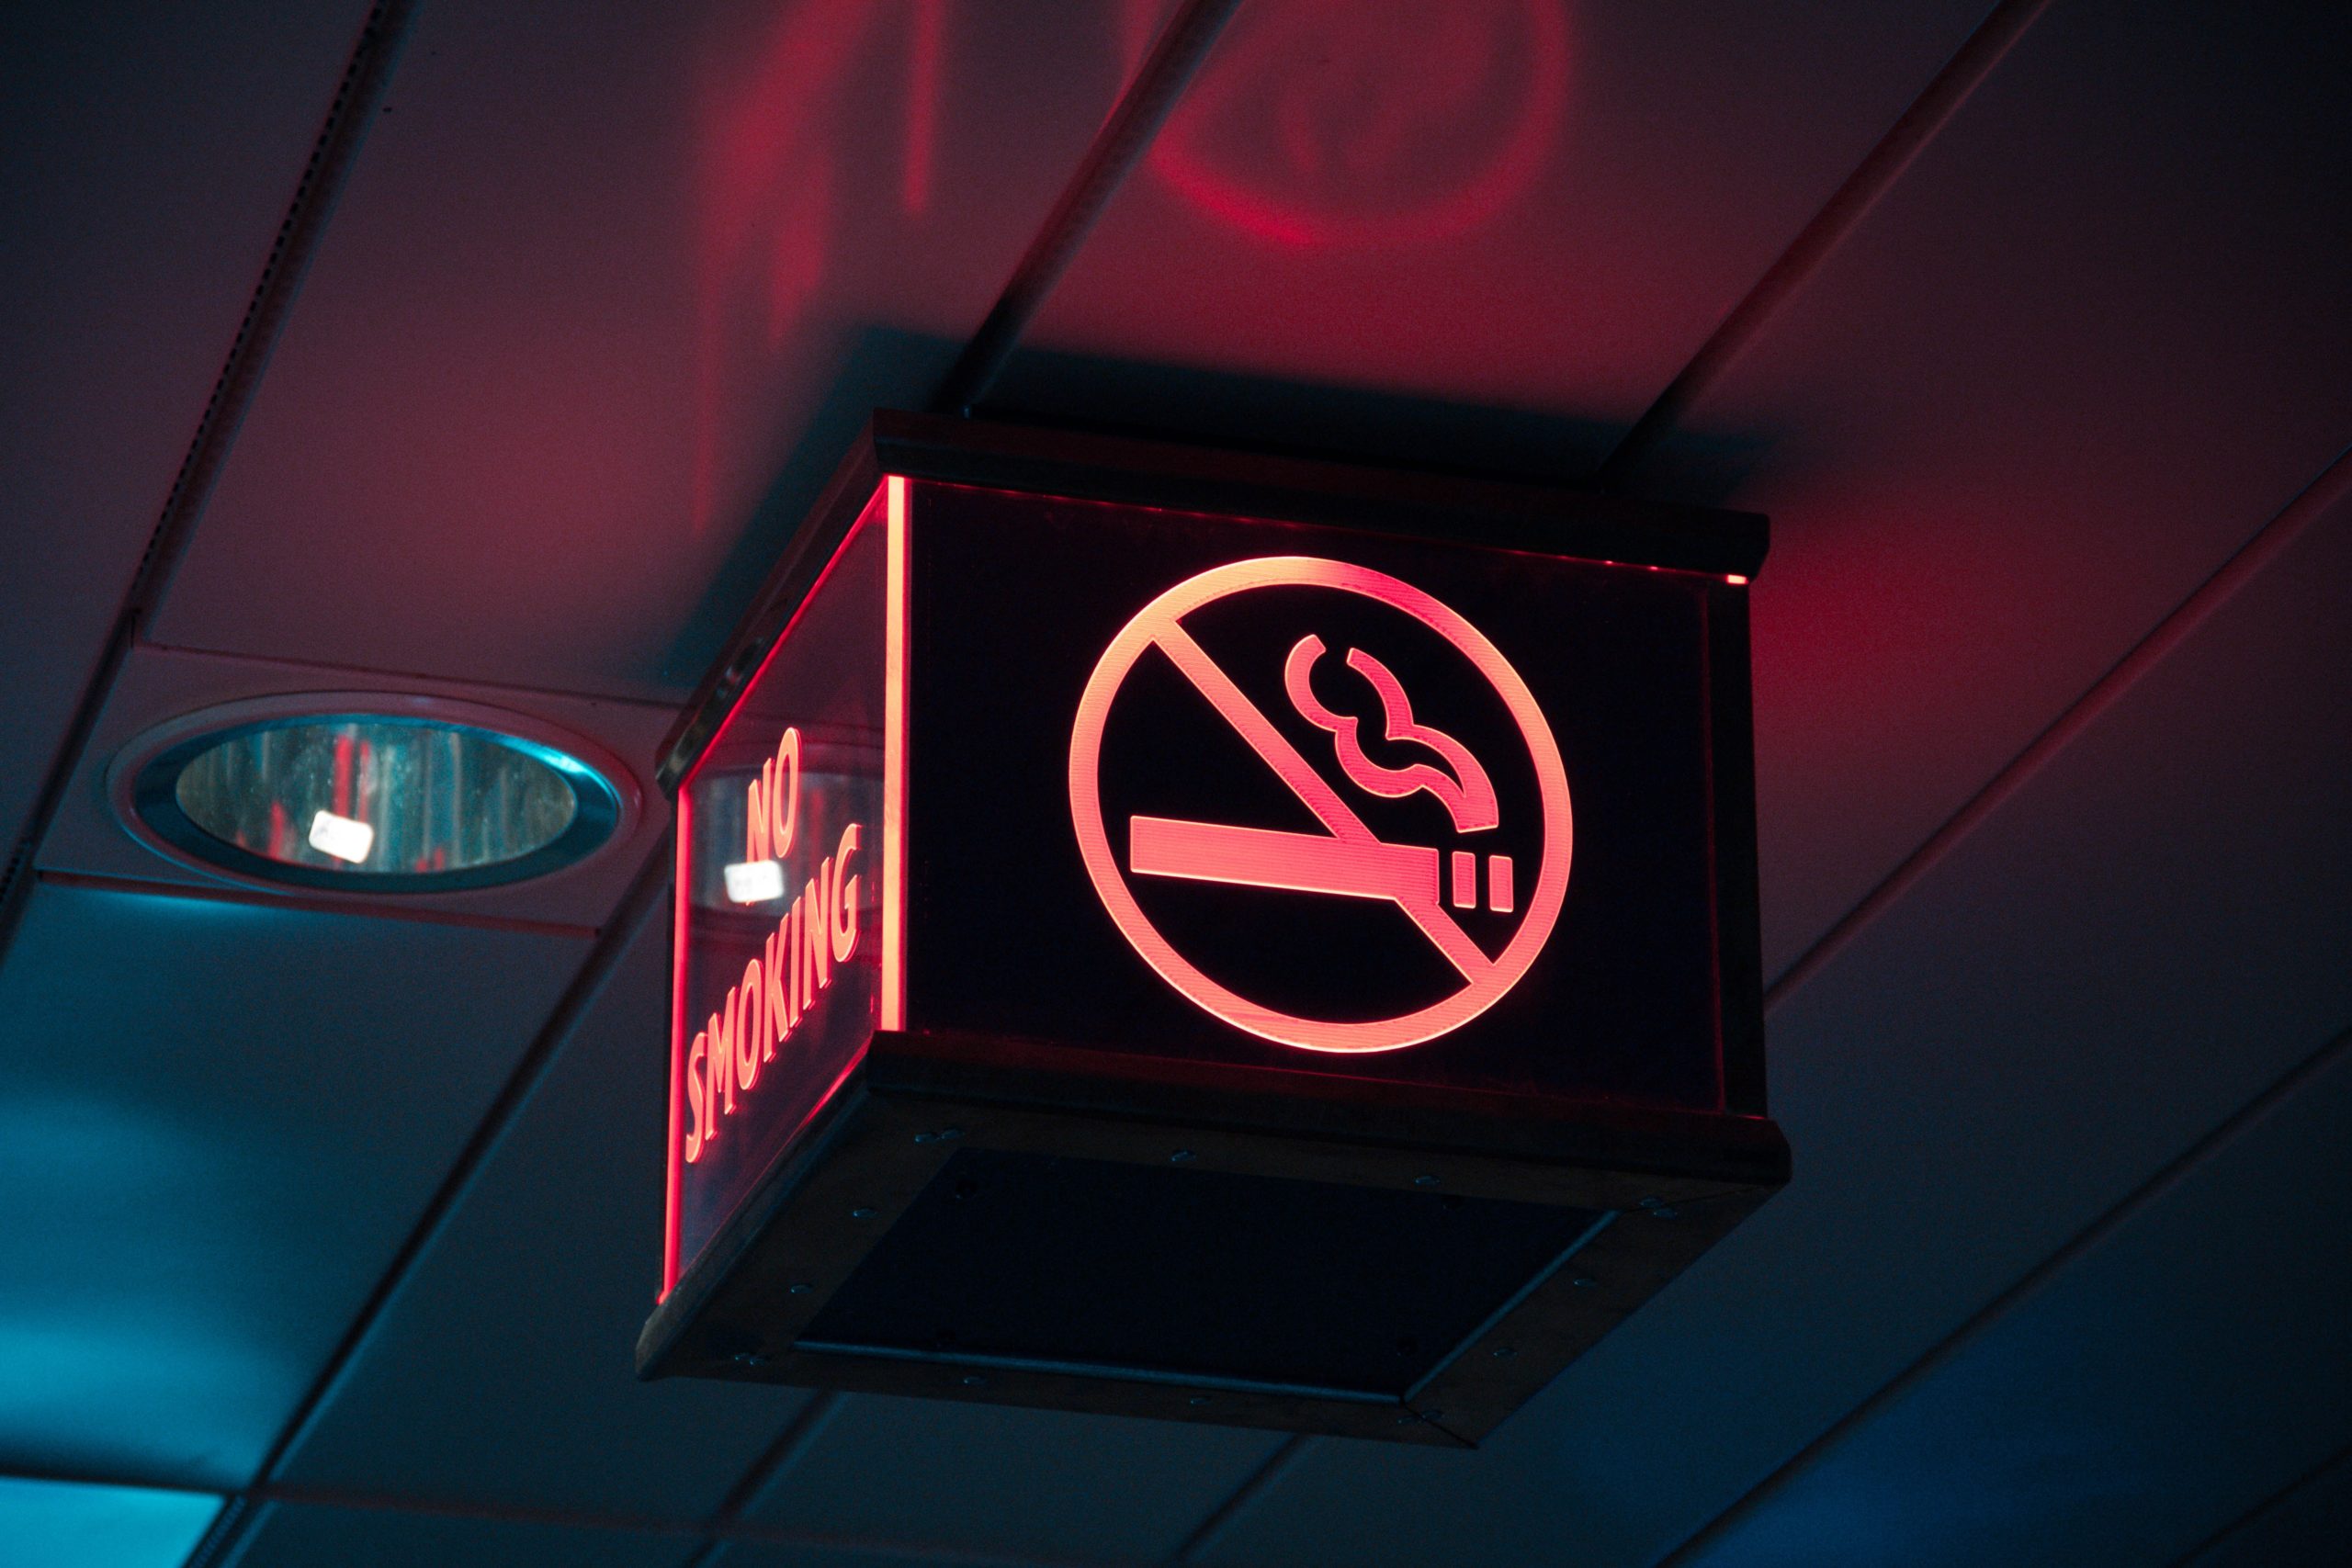 non-smoking sign in japan